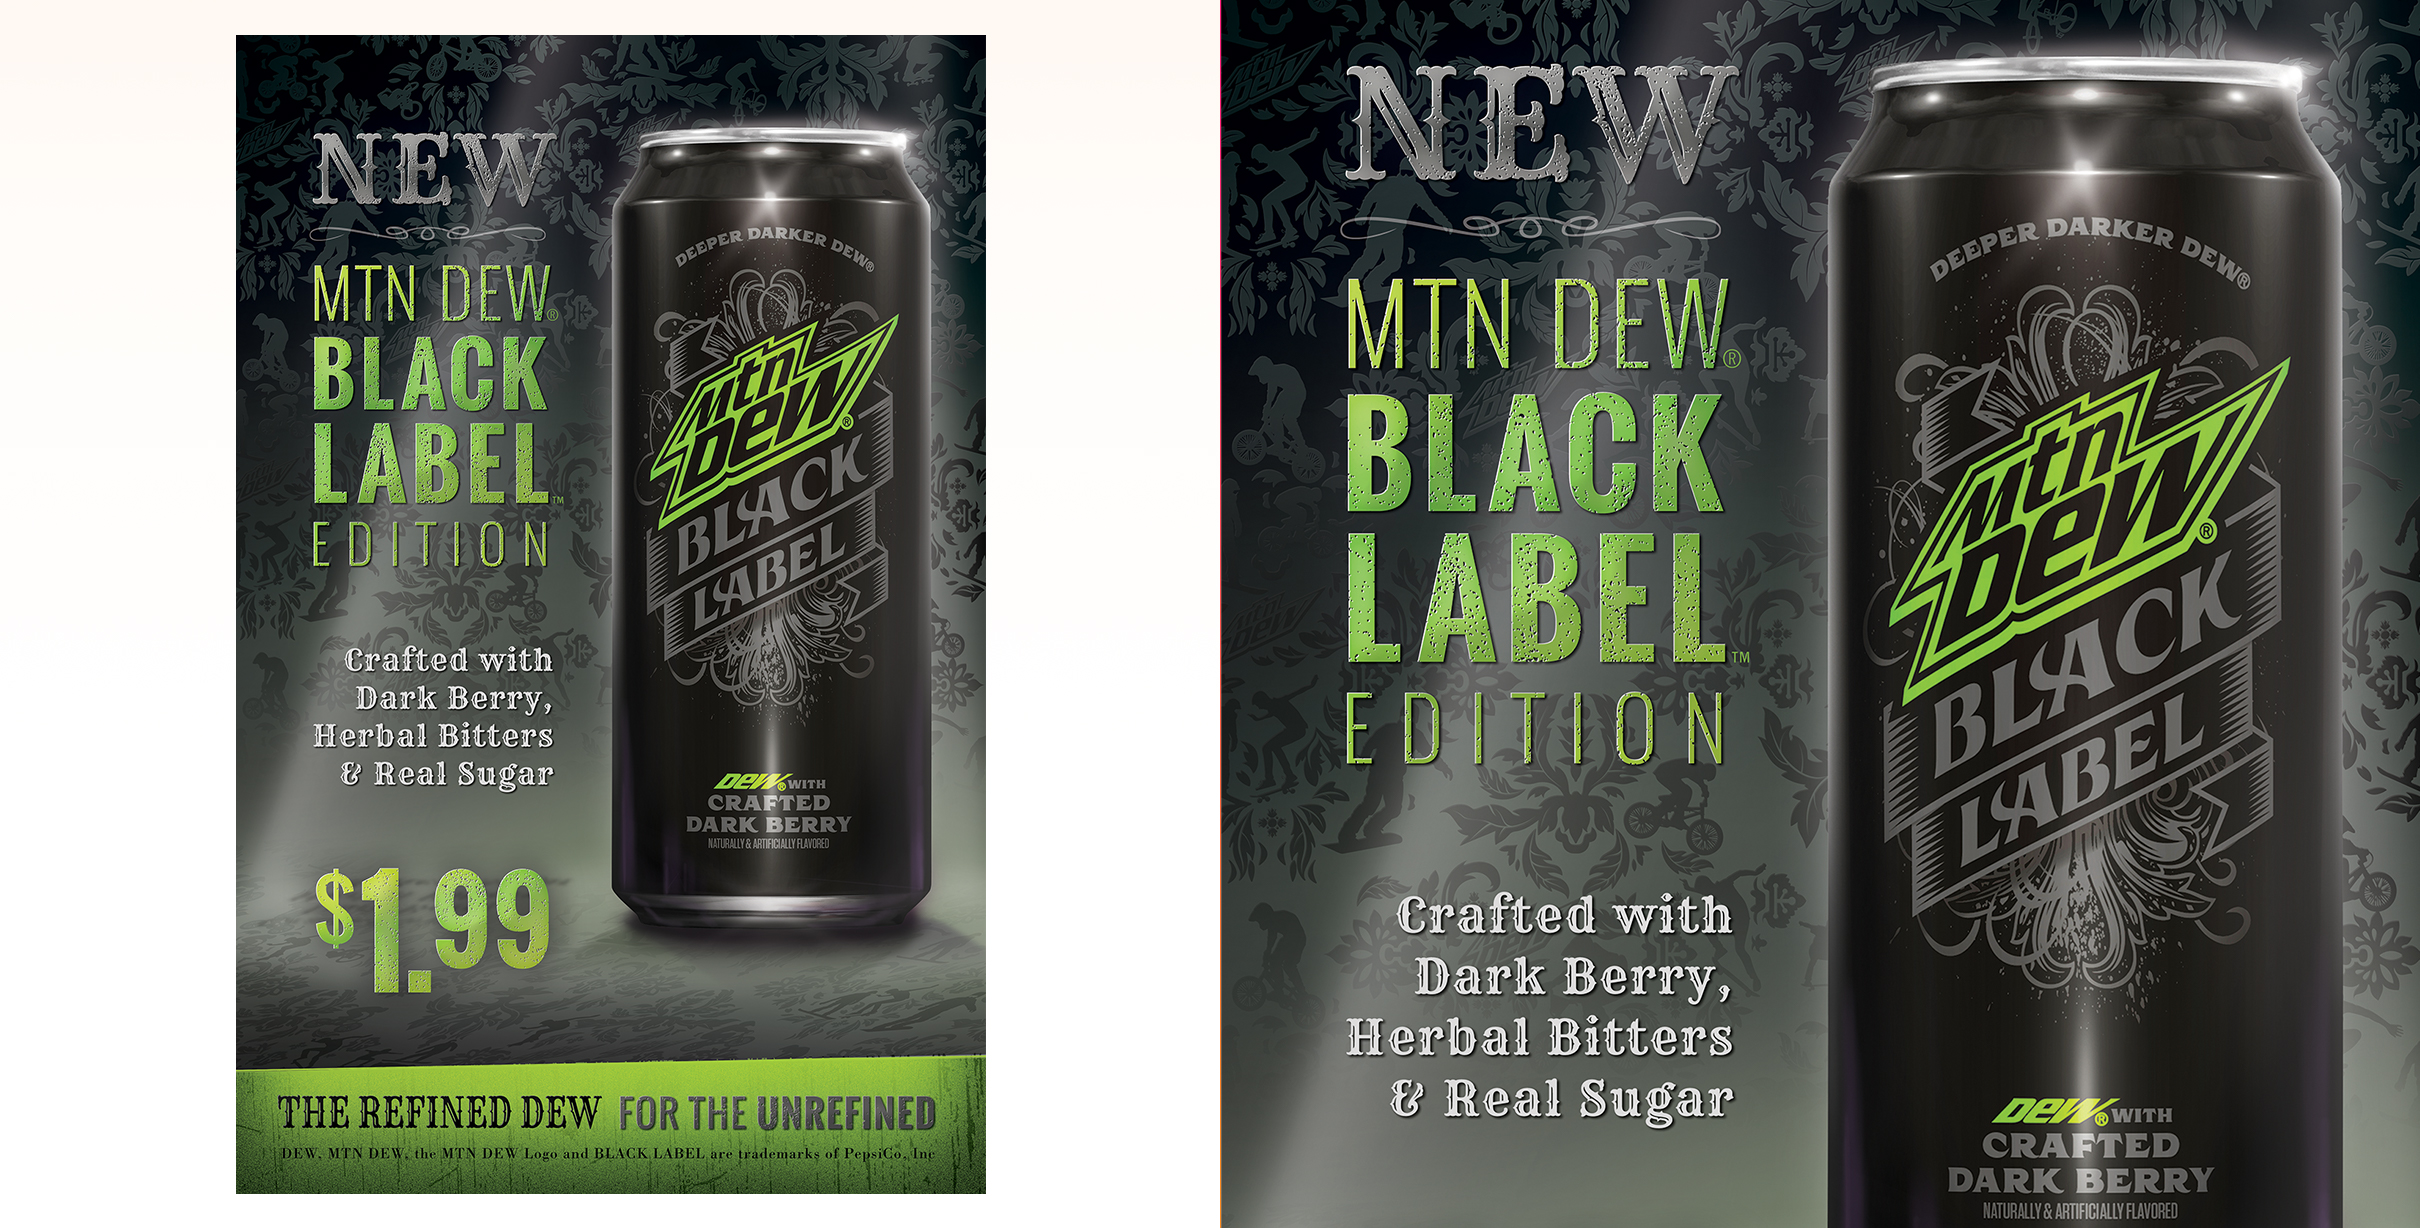 Second concept for Mtn Dew Black Label